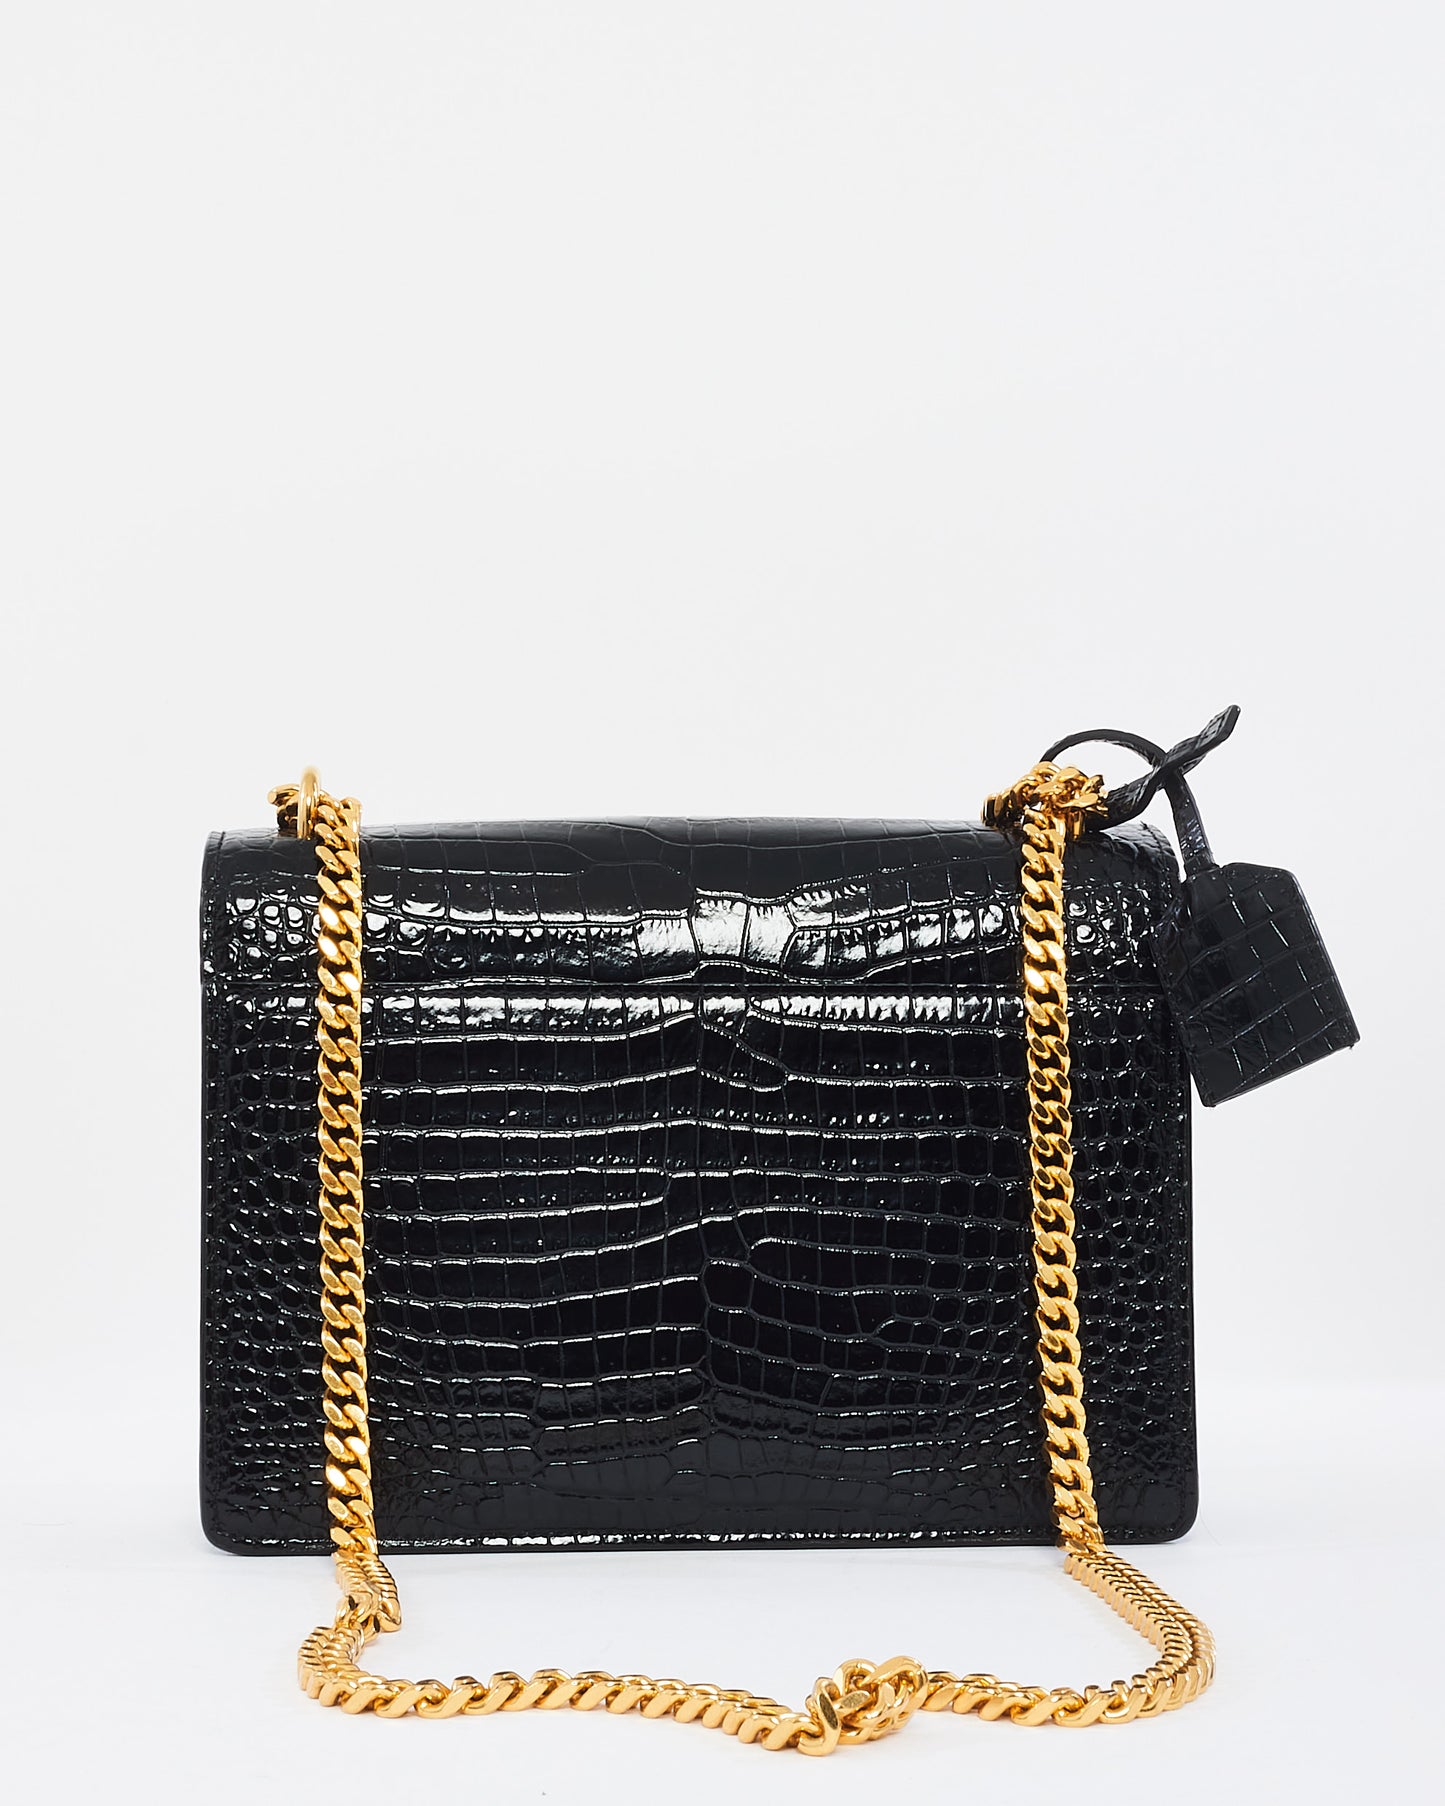 Saint Laurent Black Croc Embossed Leather Medium Sunset Shoulder Bag